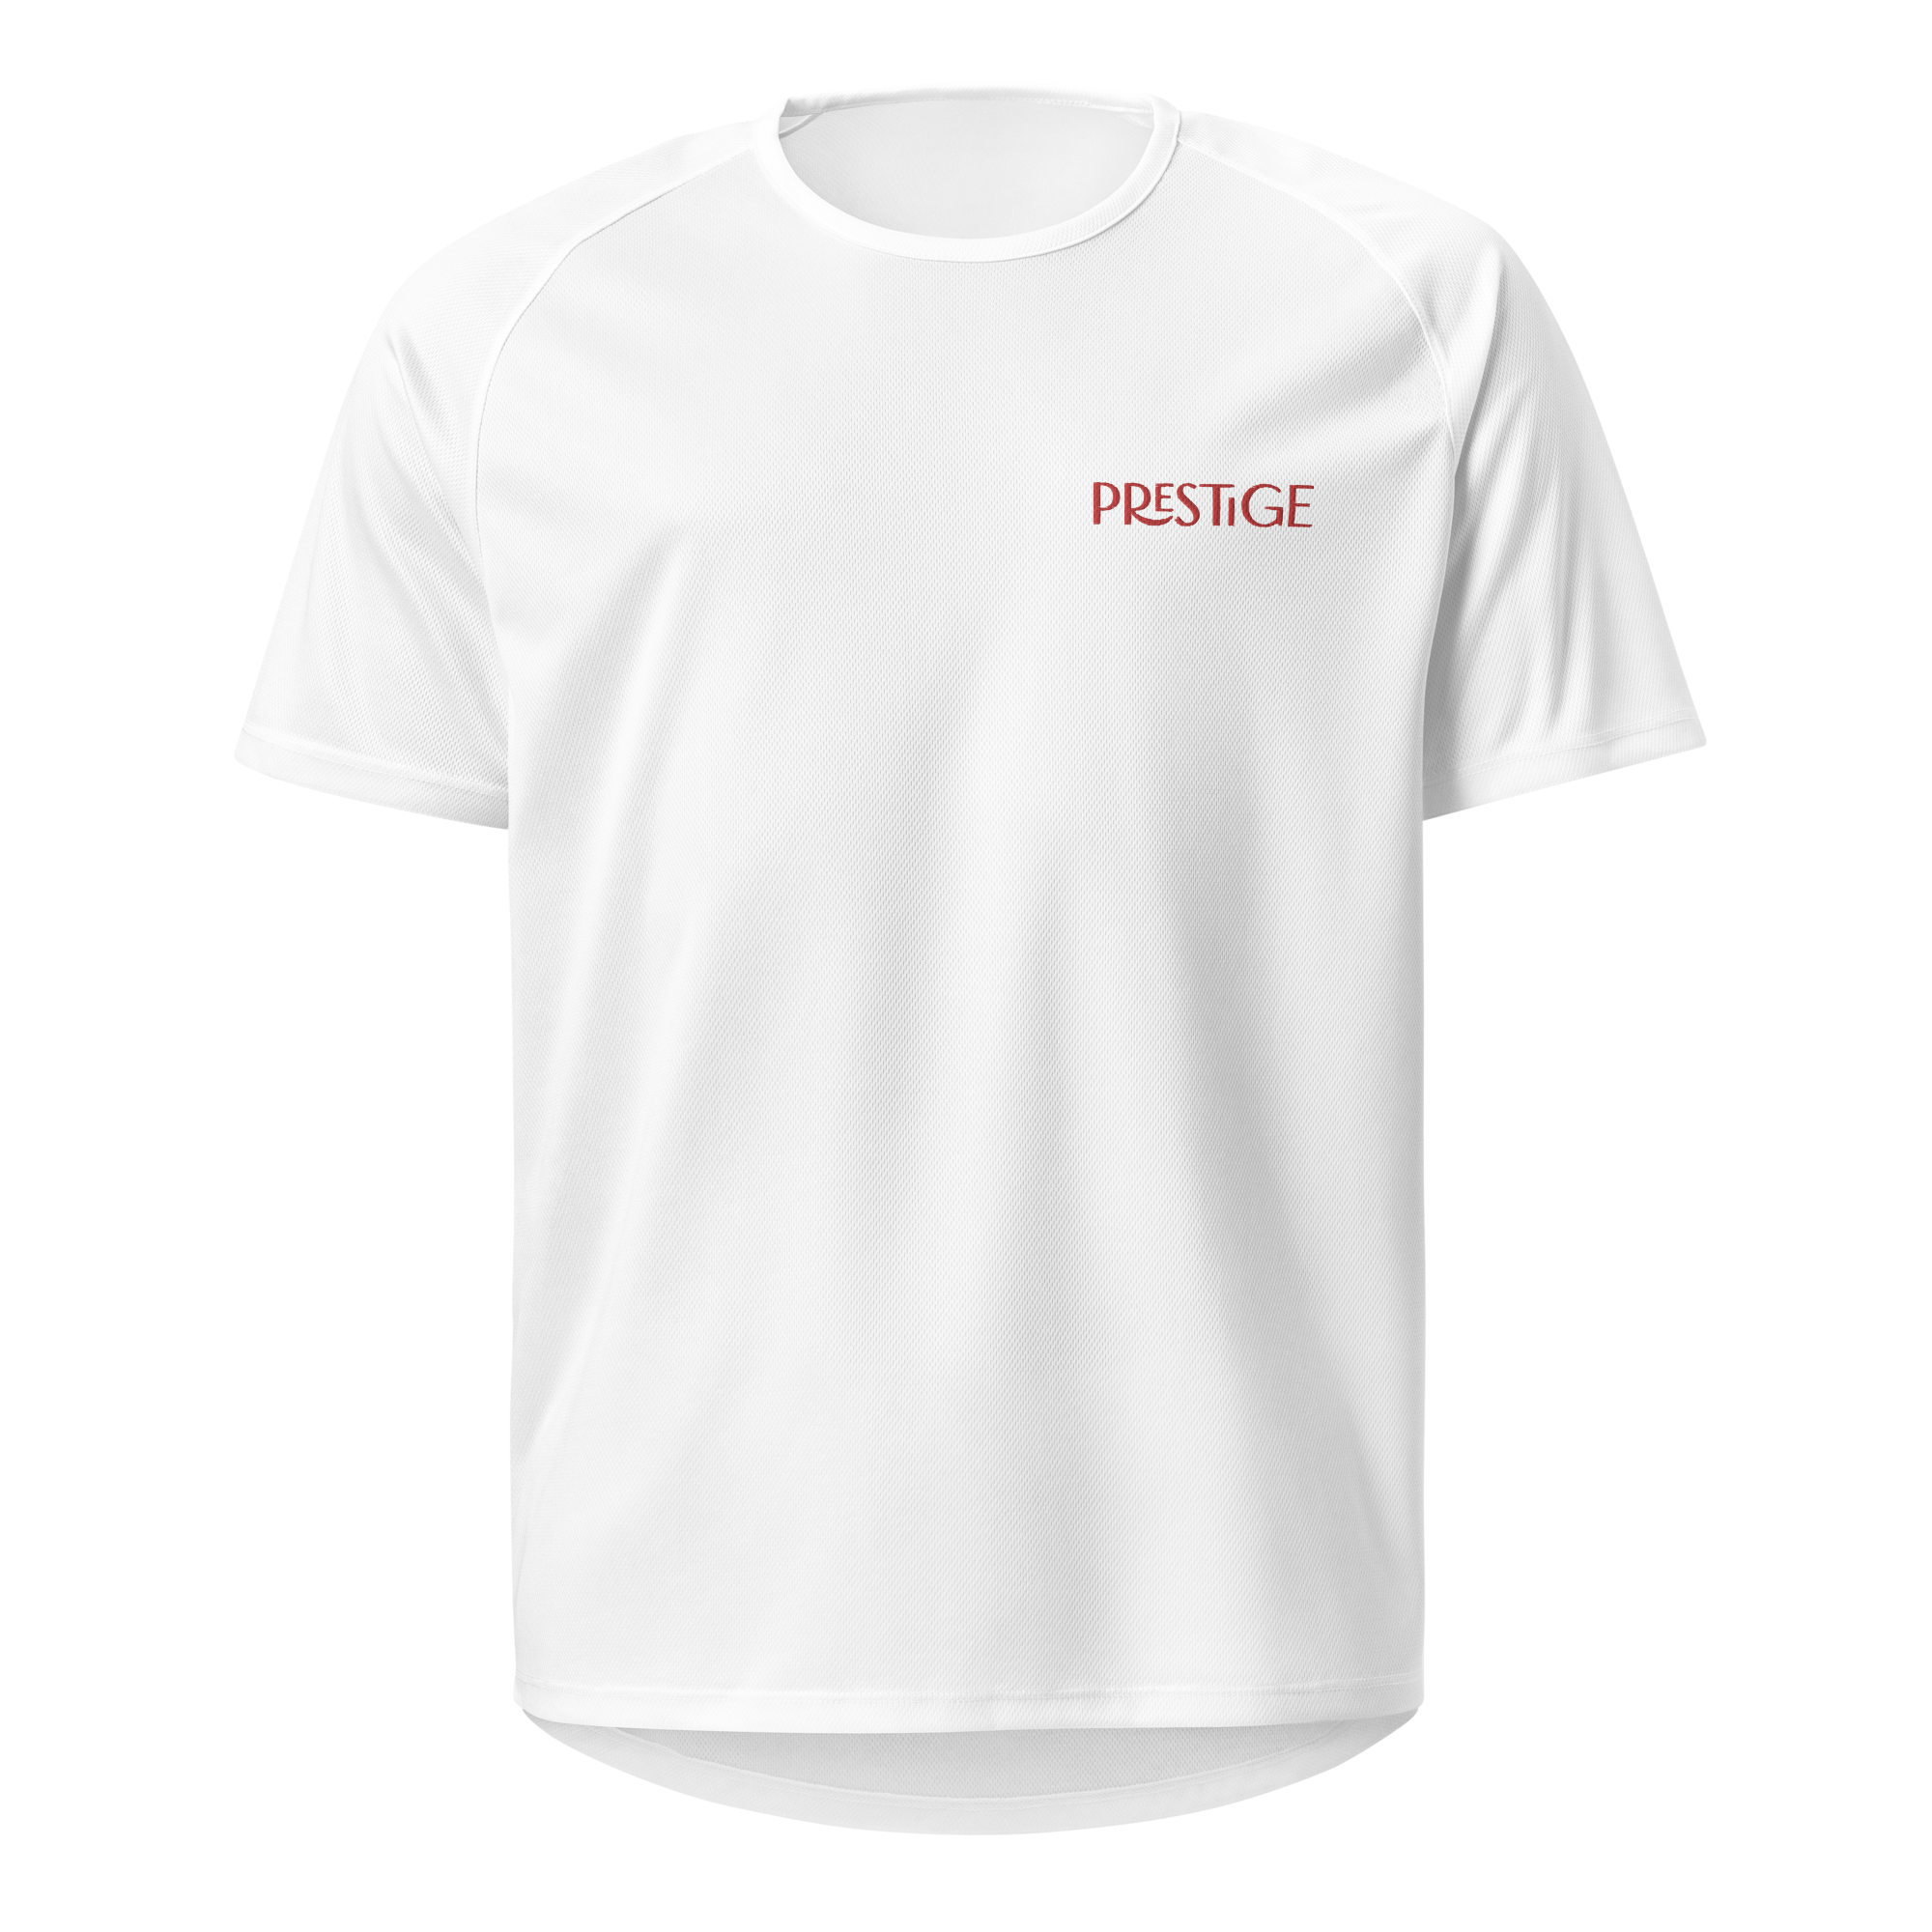 "Prestige" Embroidered Unisex Sports Jersey